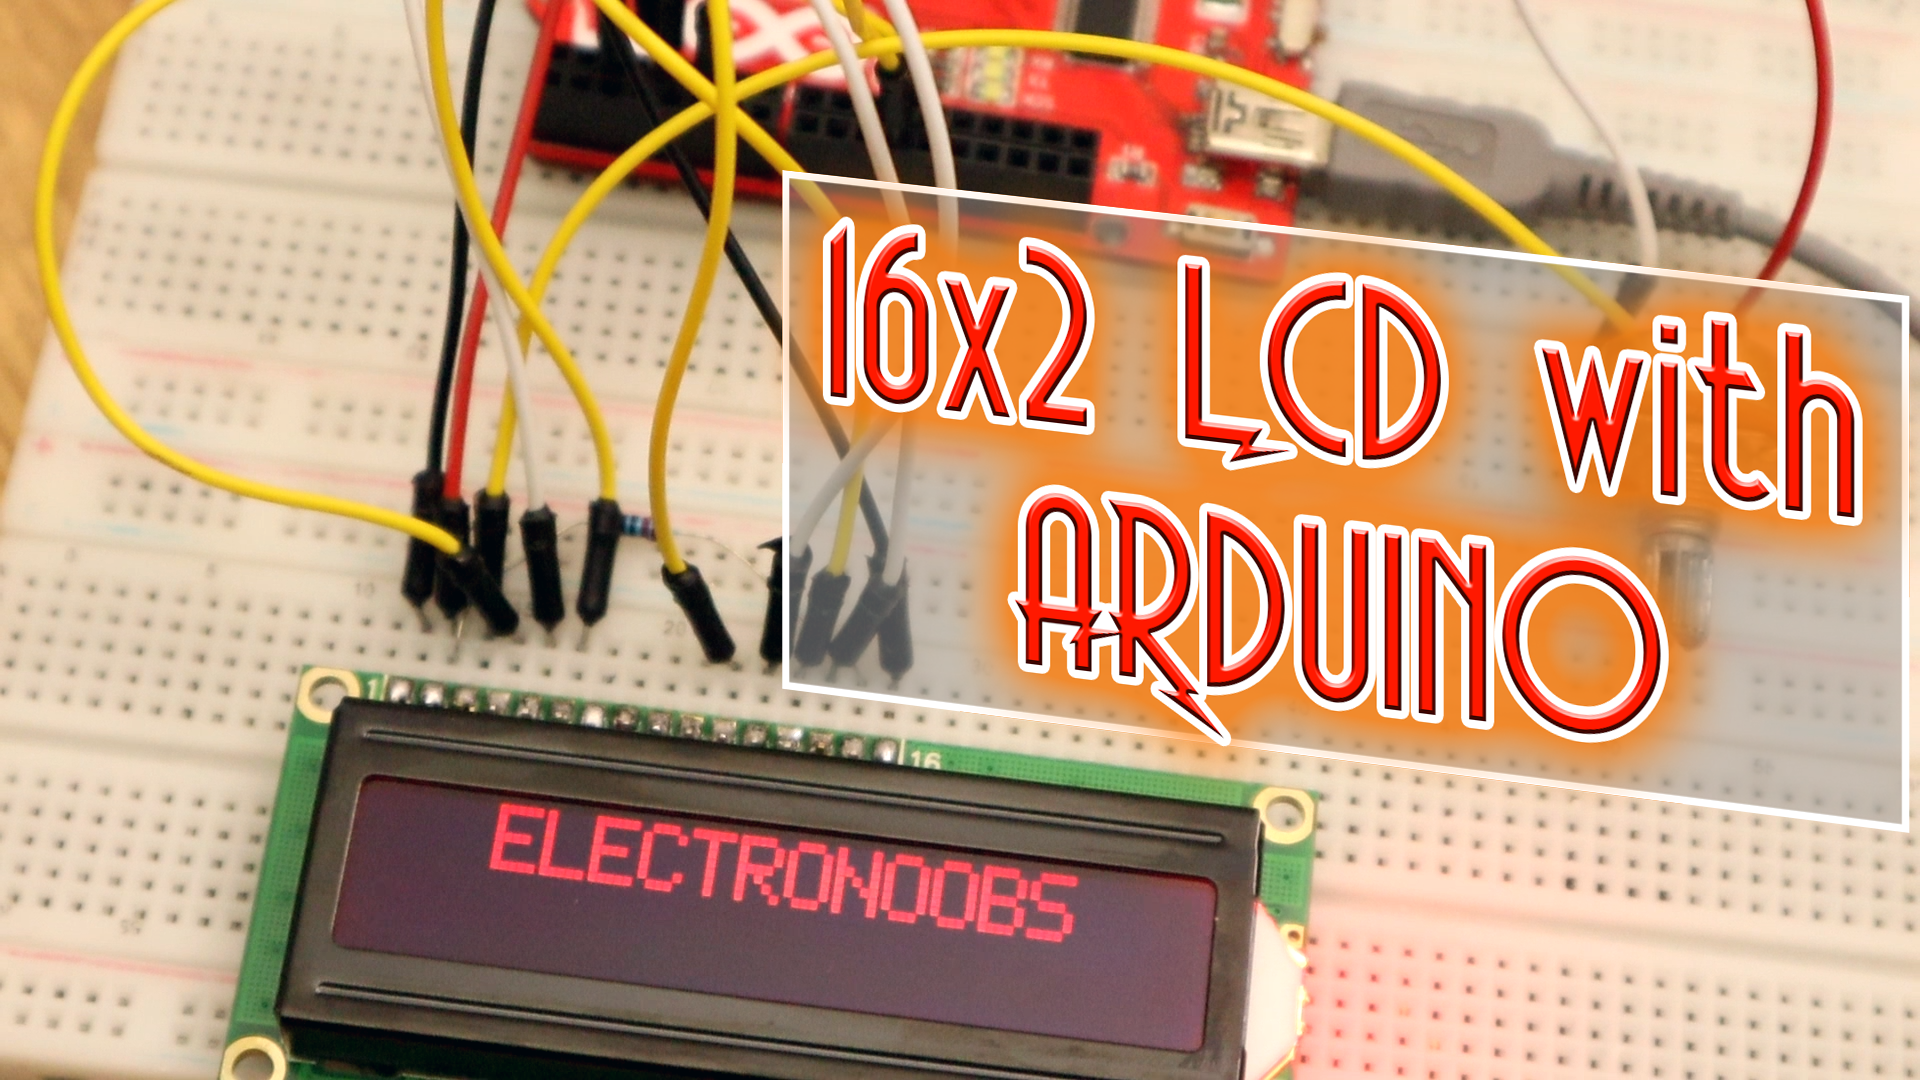 16x2 LCD Arduino example